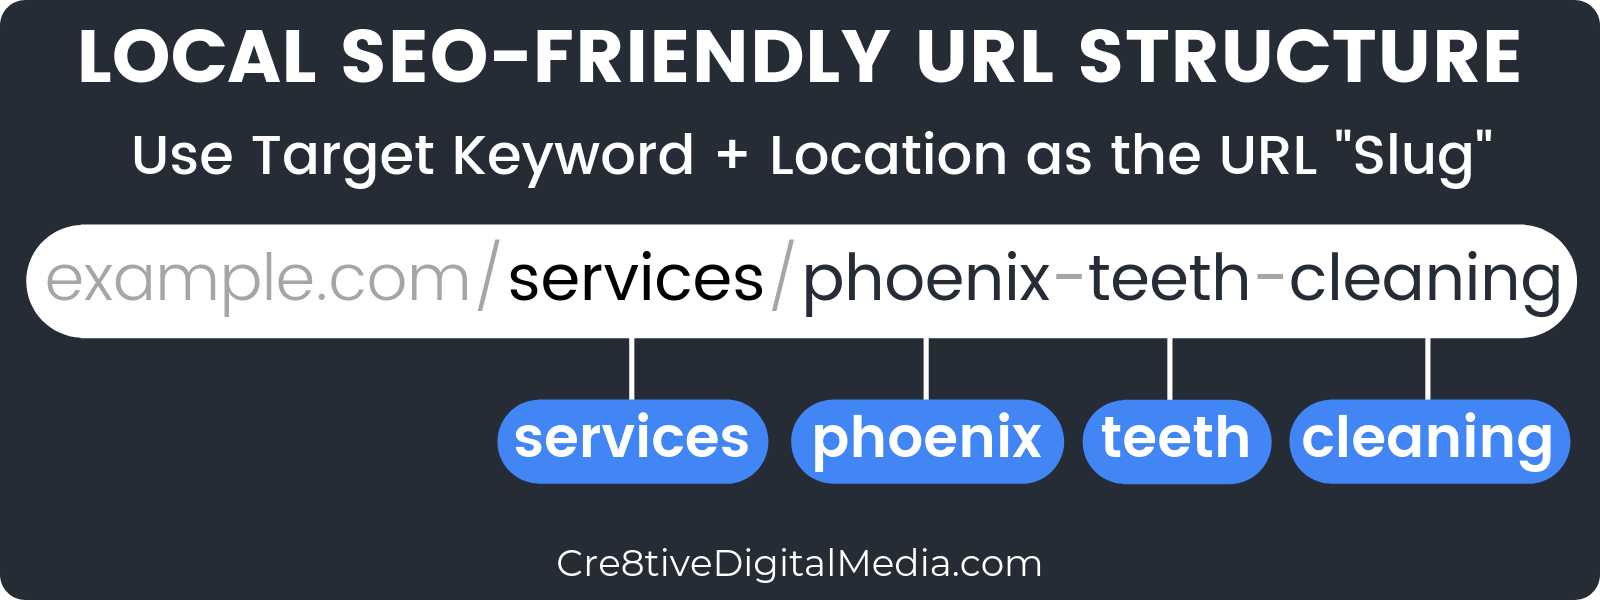 Local SEO-Friendly URL structure